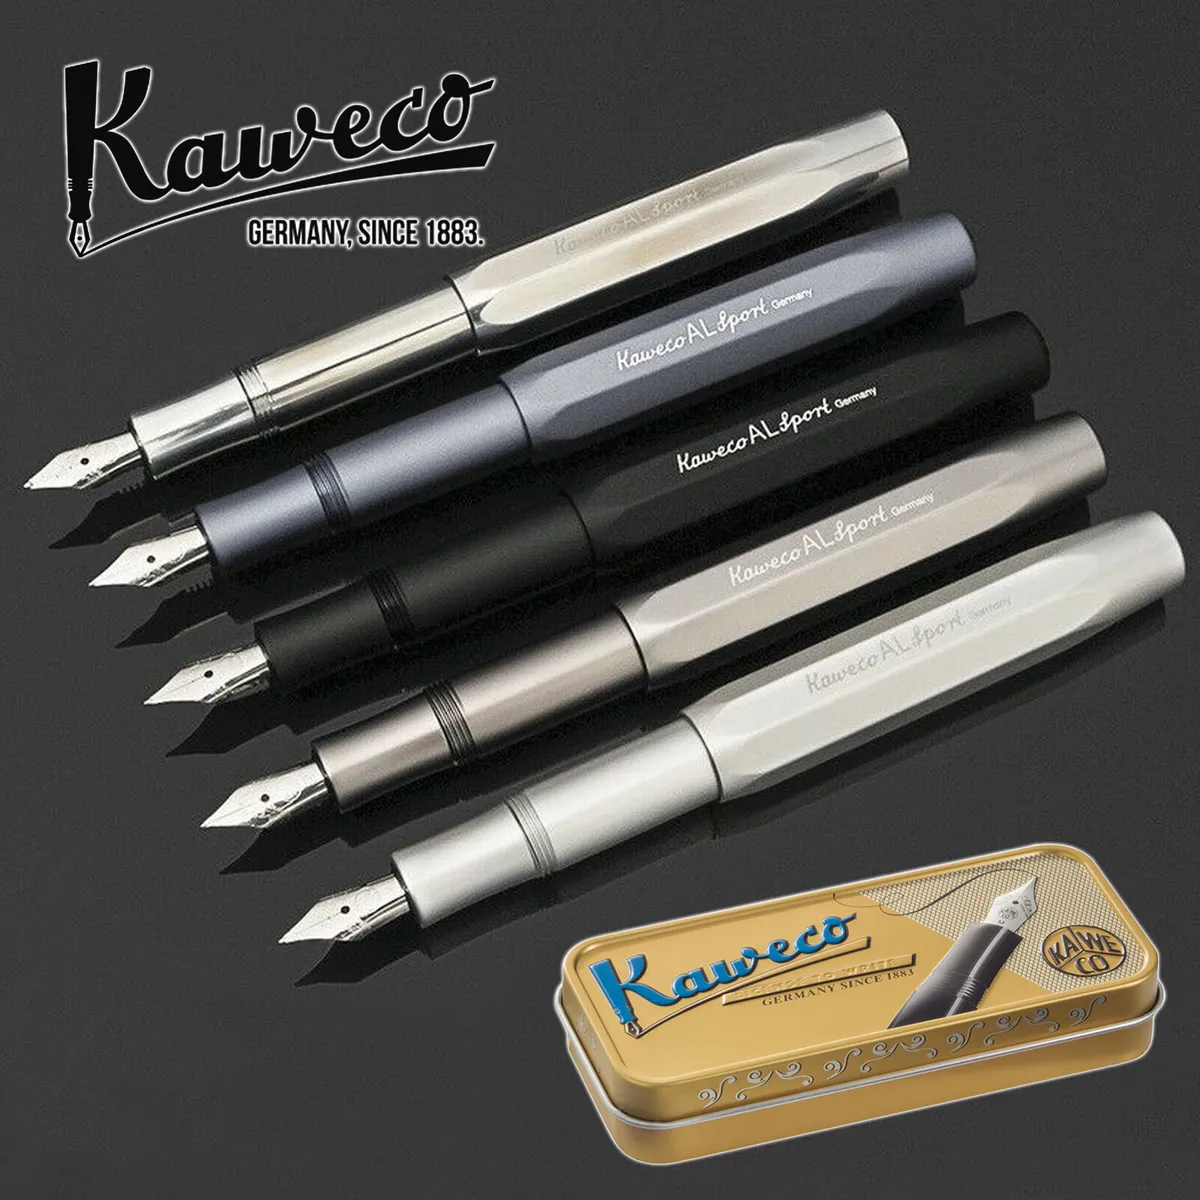 Kaweco AL Sport Pocket Fountain Pen - Choose Colour & Nib Options